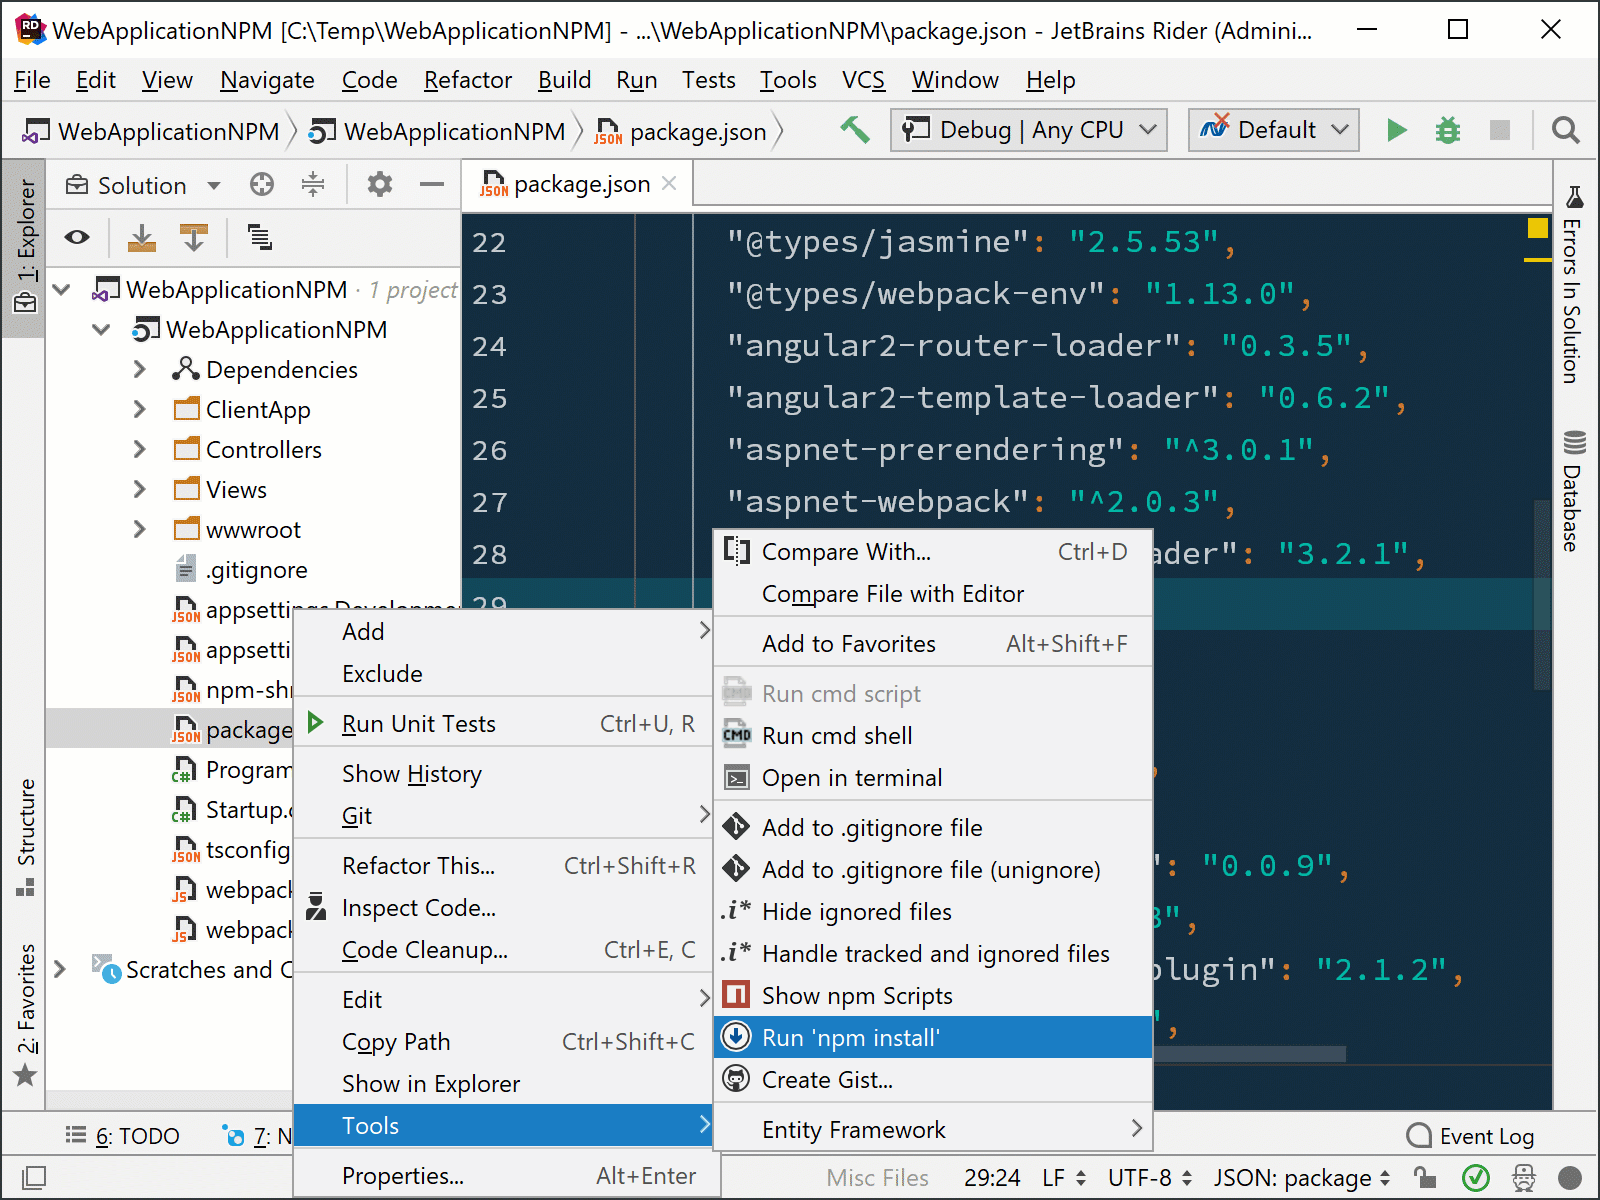 Run NPM install from the context menu